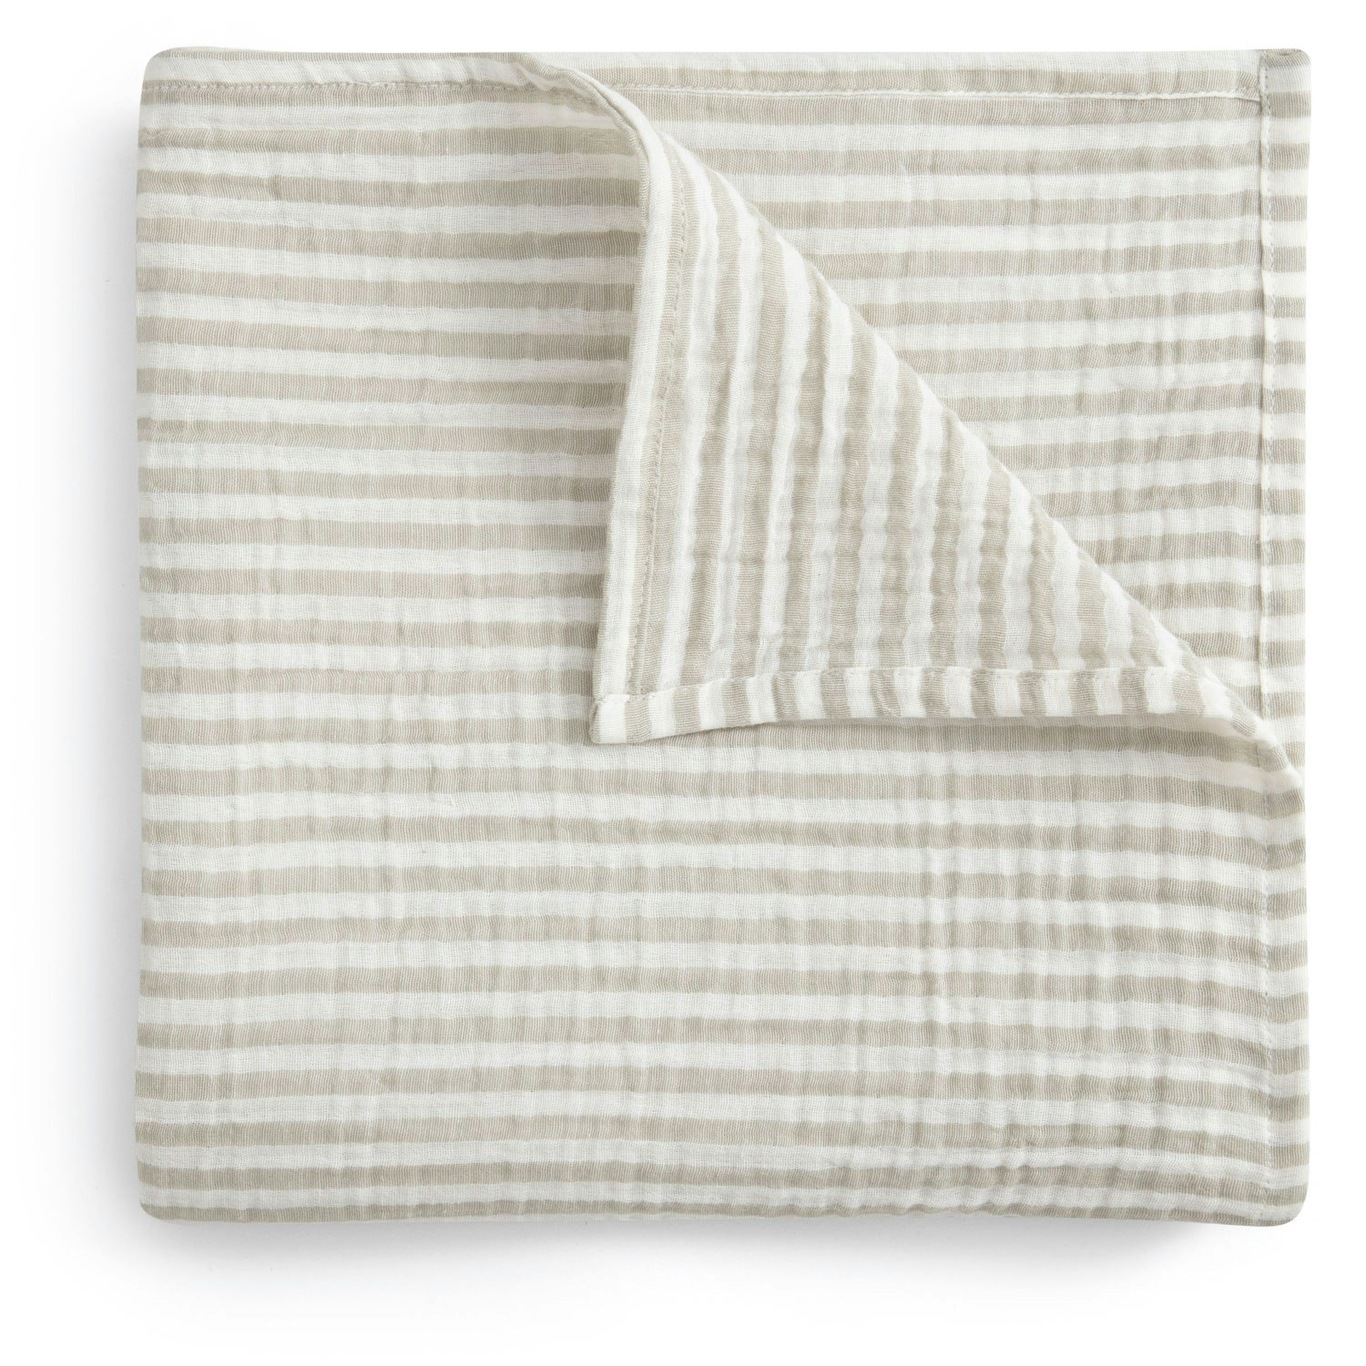 Stripe Anjou Babysvøb Musselin, 110x110 cm